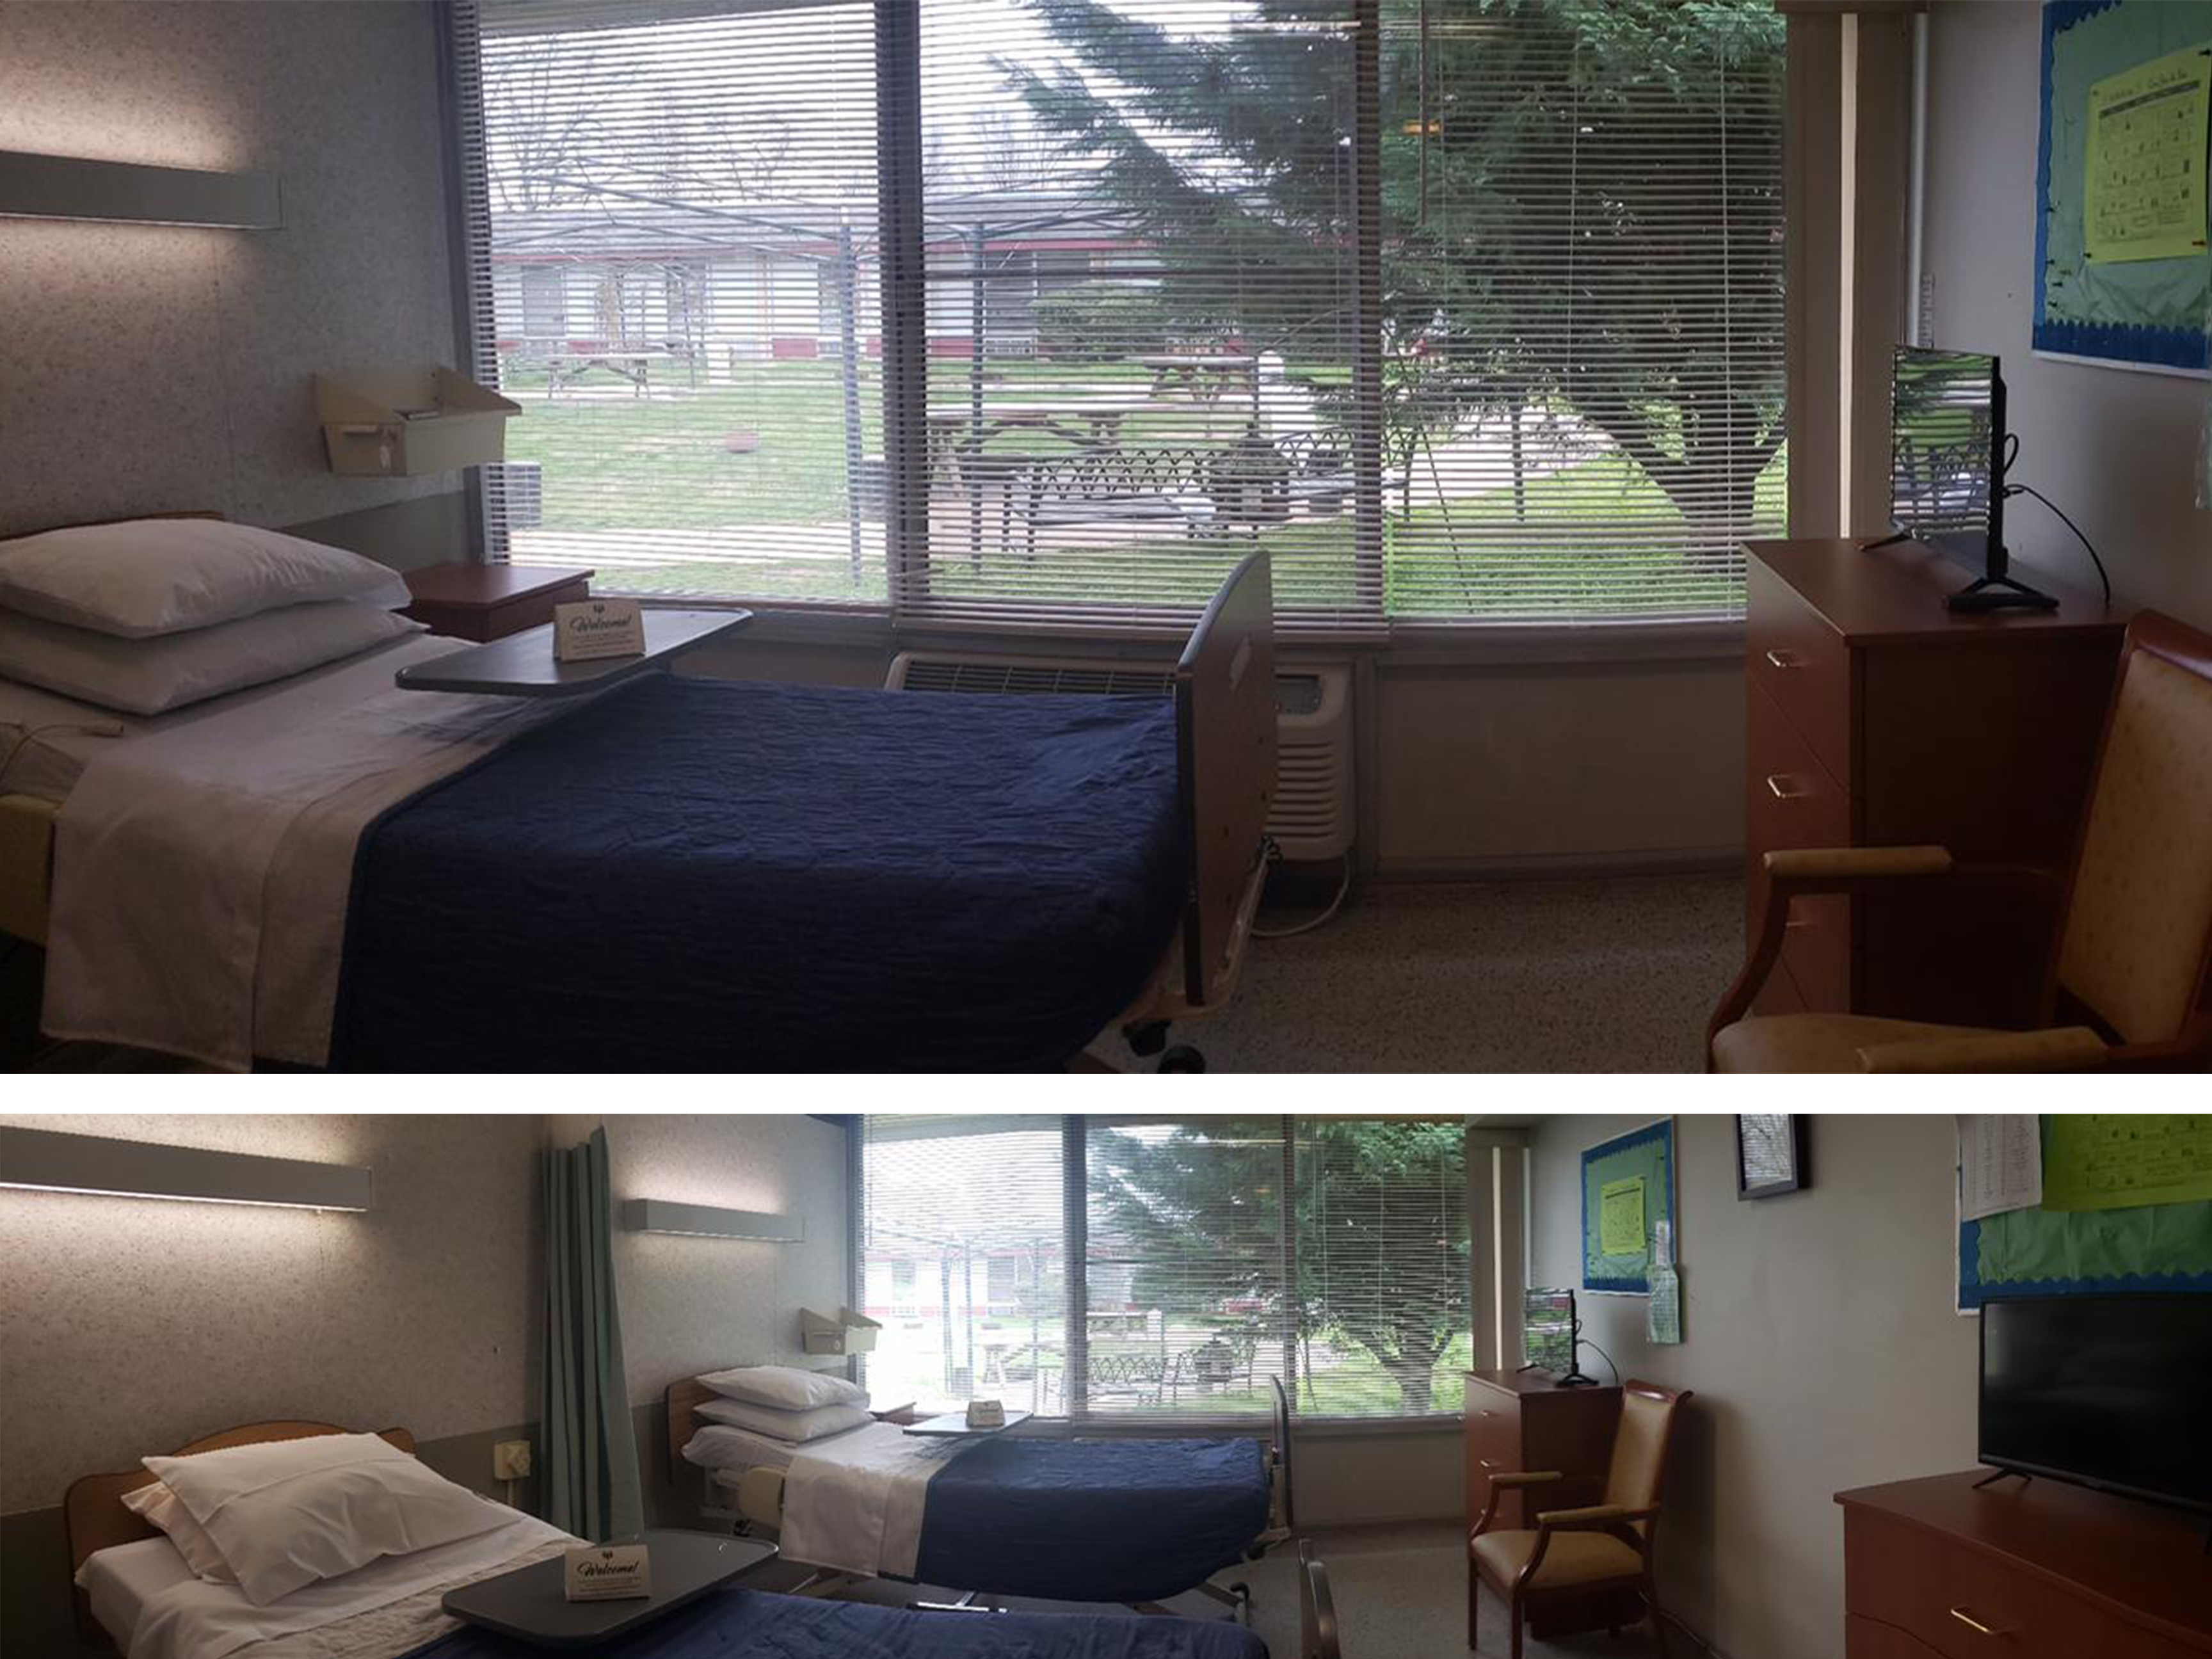 Jefferson City Health and Rehabilitation Center